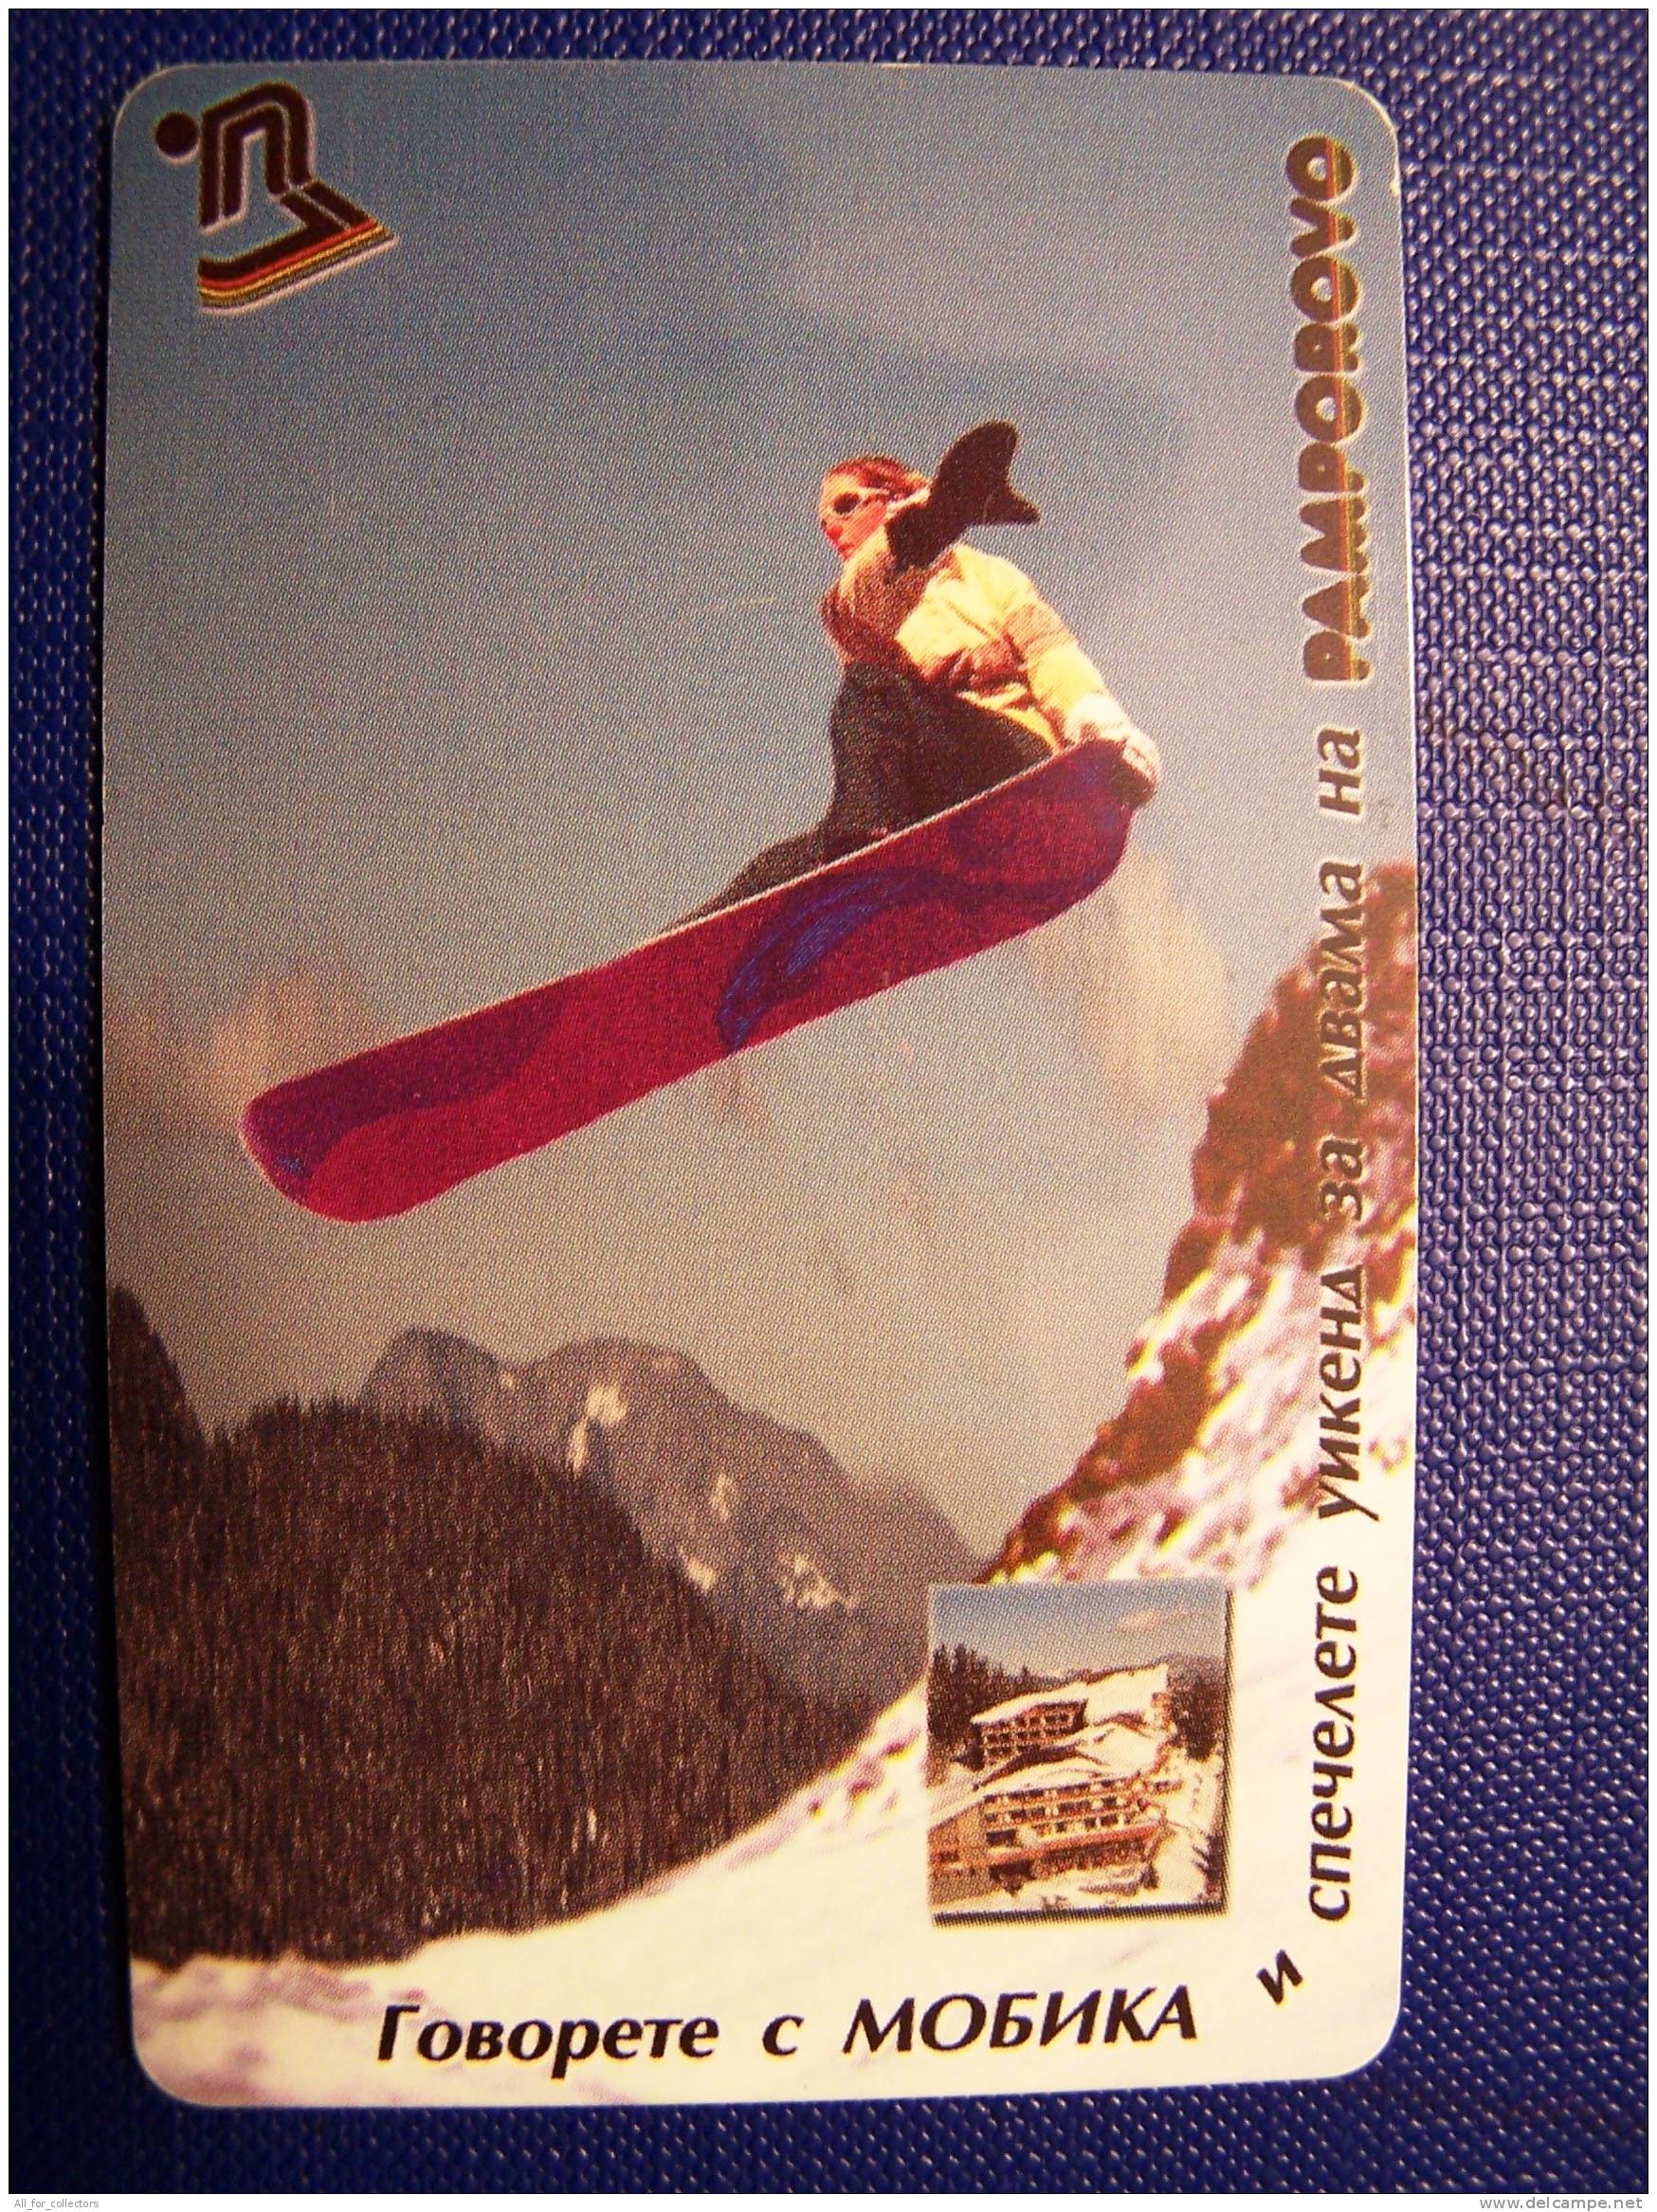 Mountains, Sport, Bulgaria Chip Phone Card, Mobika, Snowboard, - Montagnes